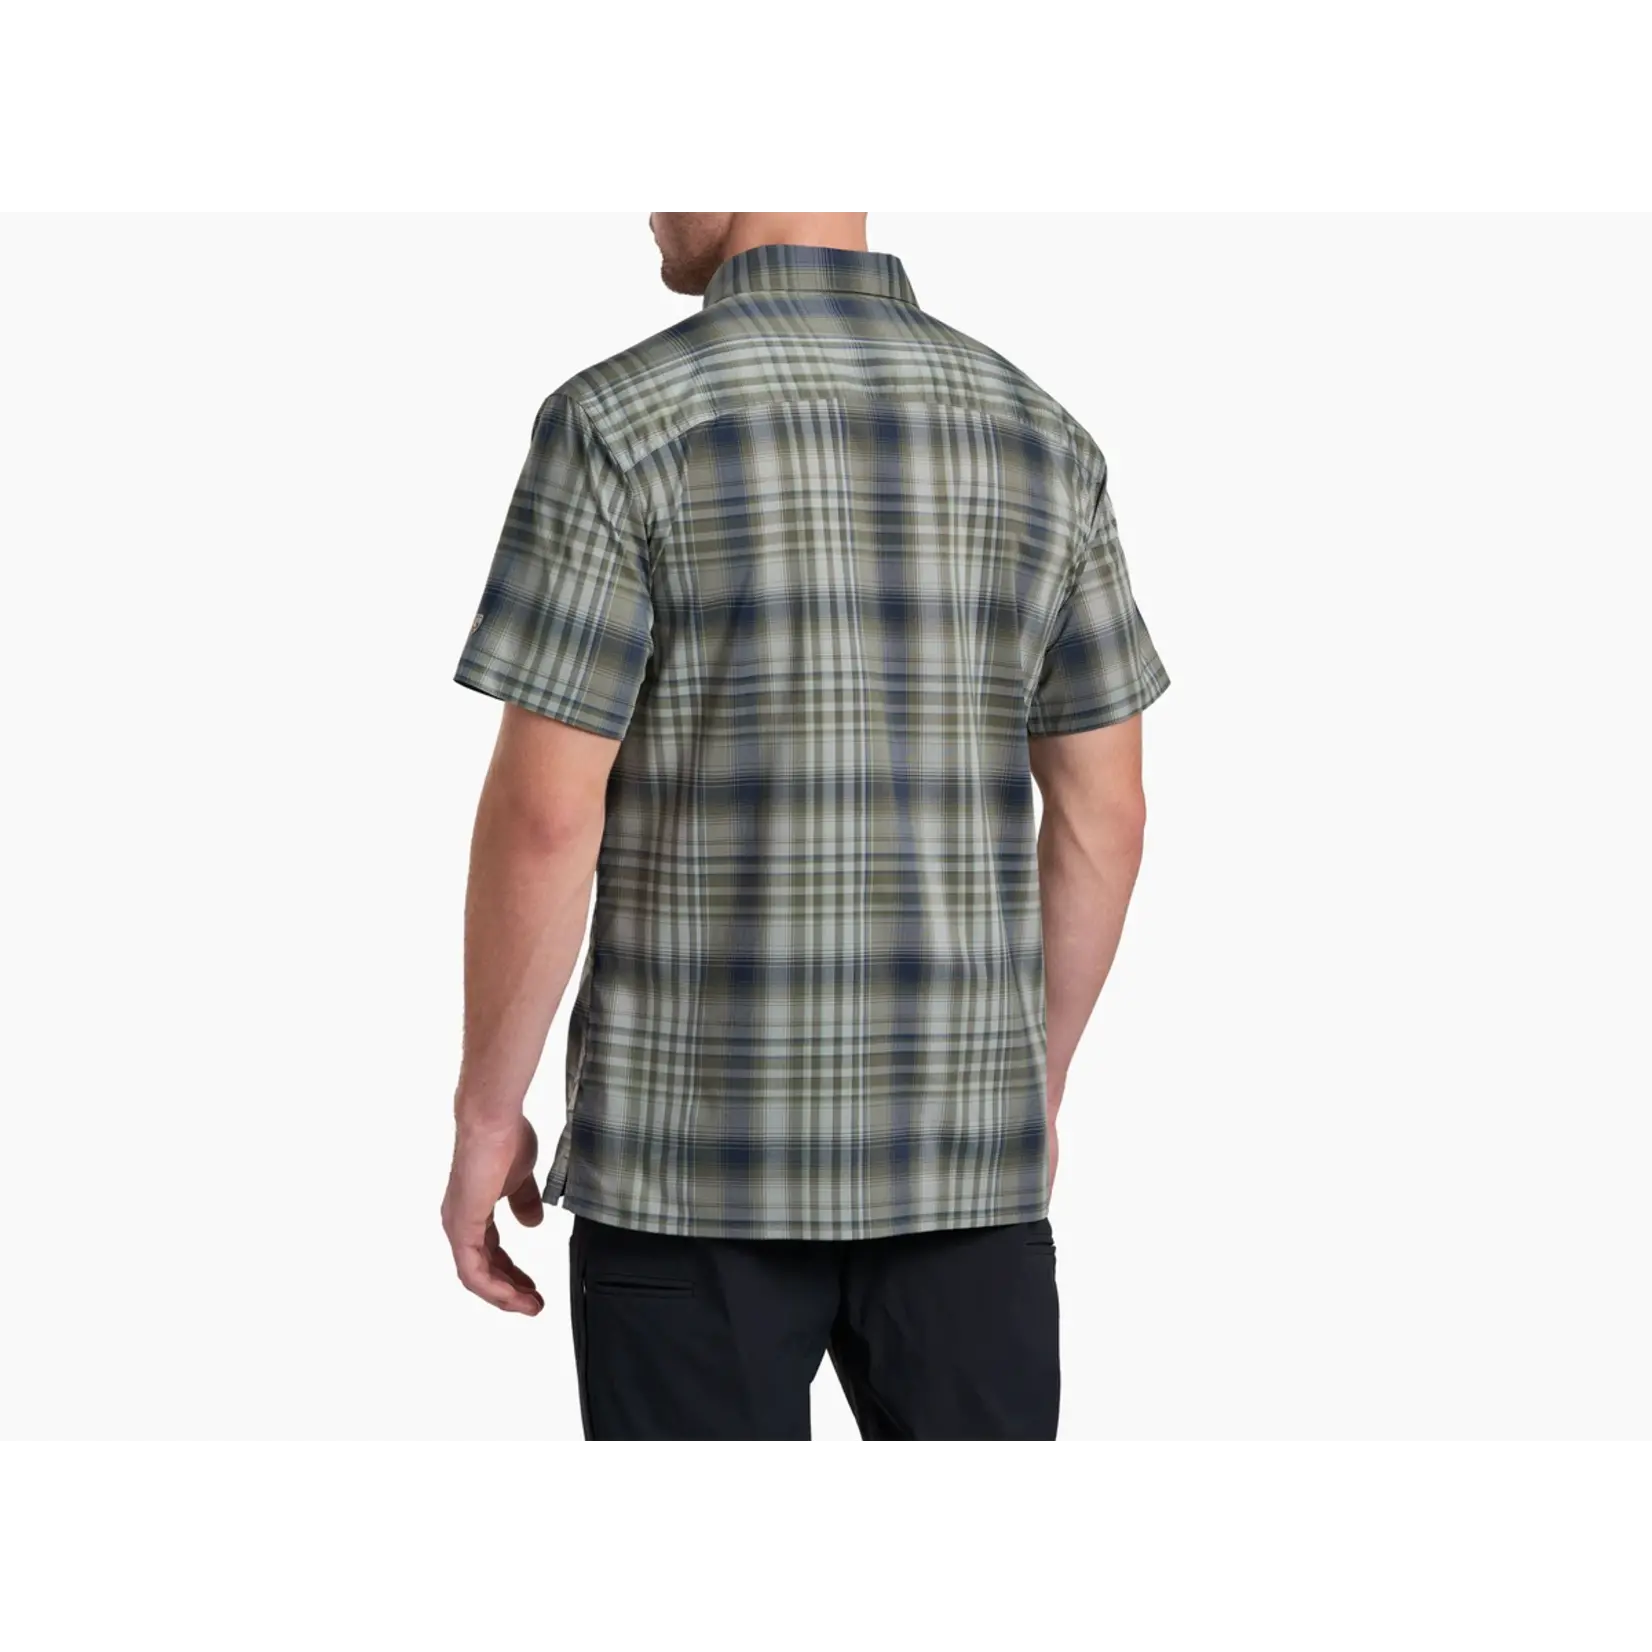 Kuhl Response Short Sleeve Shirt